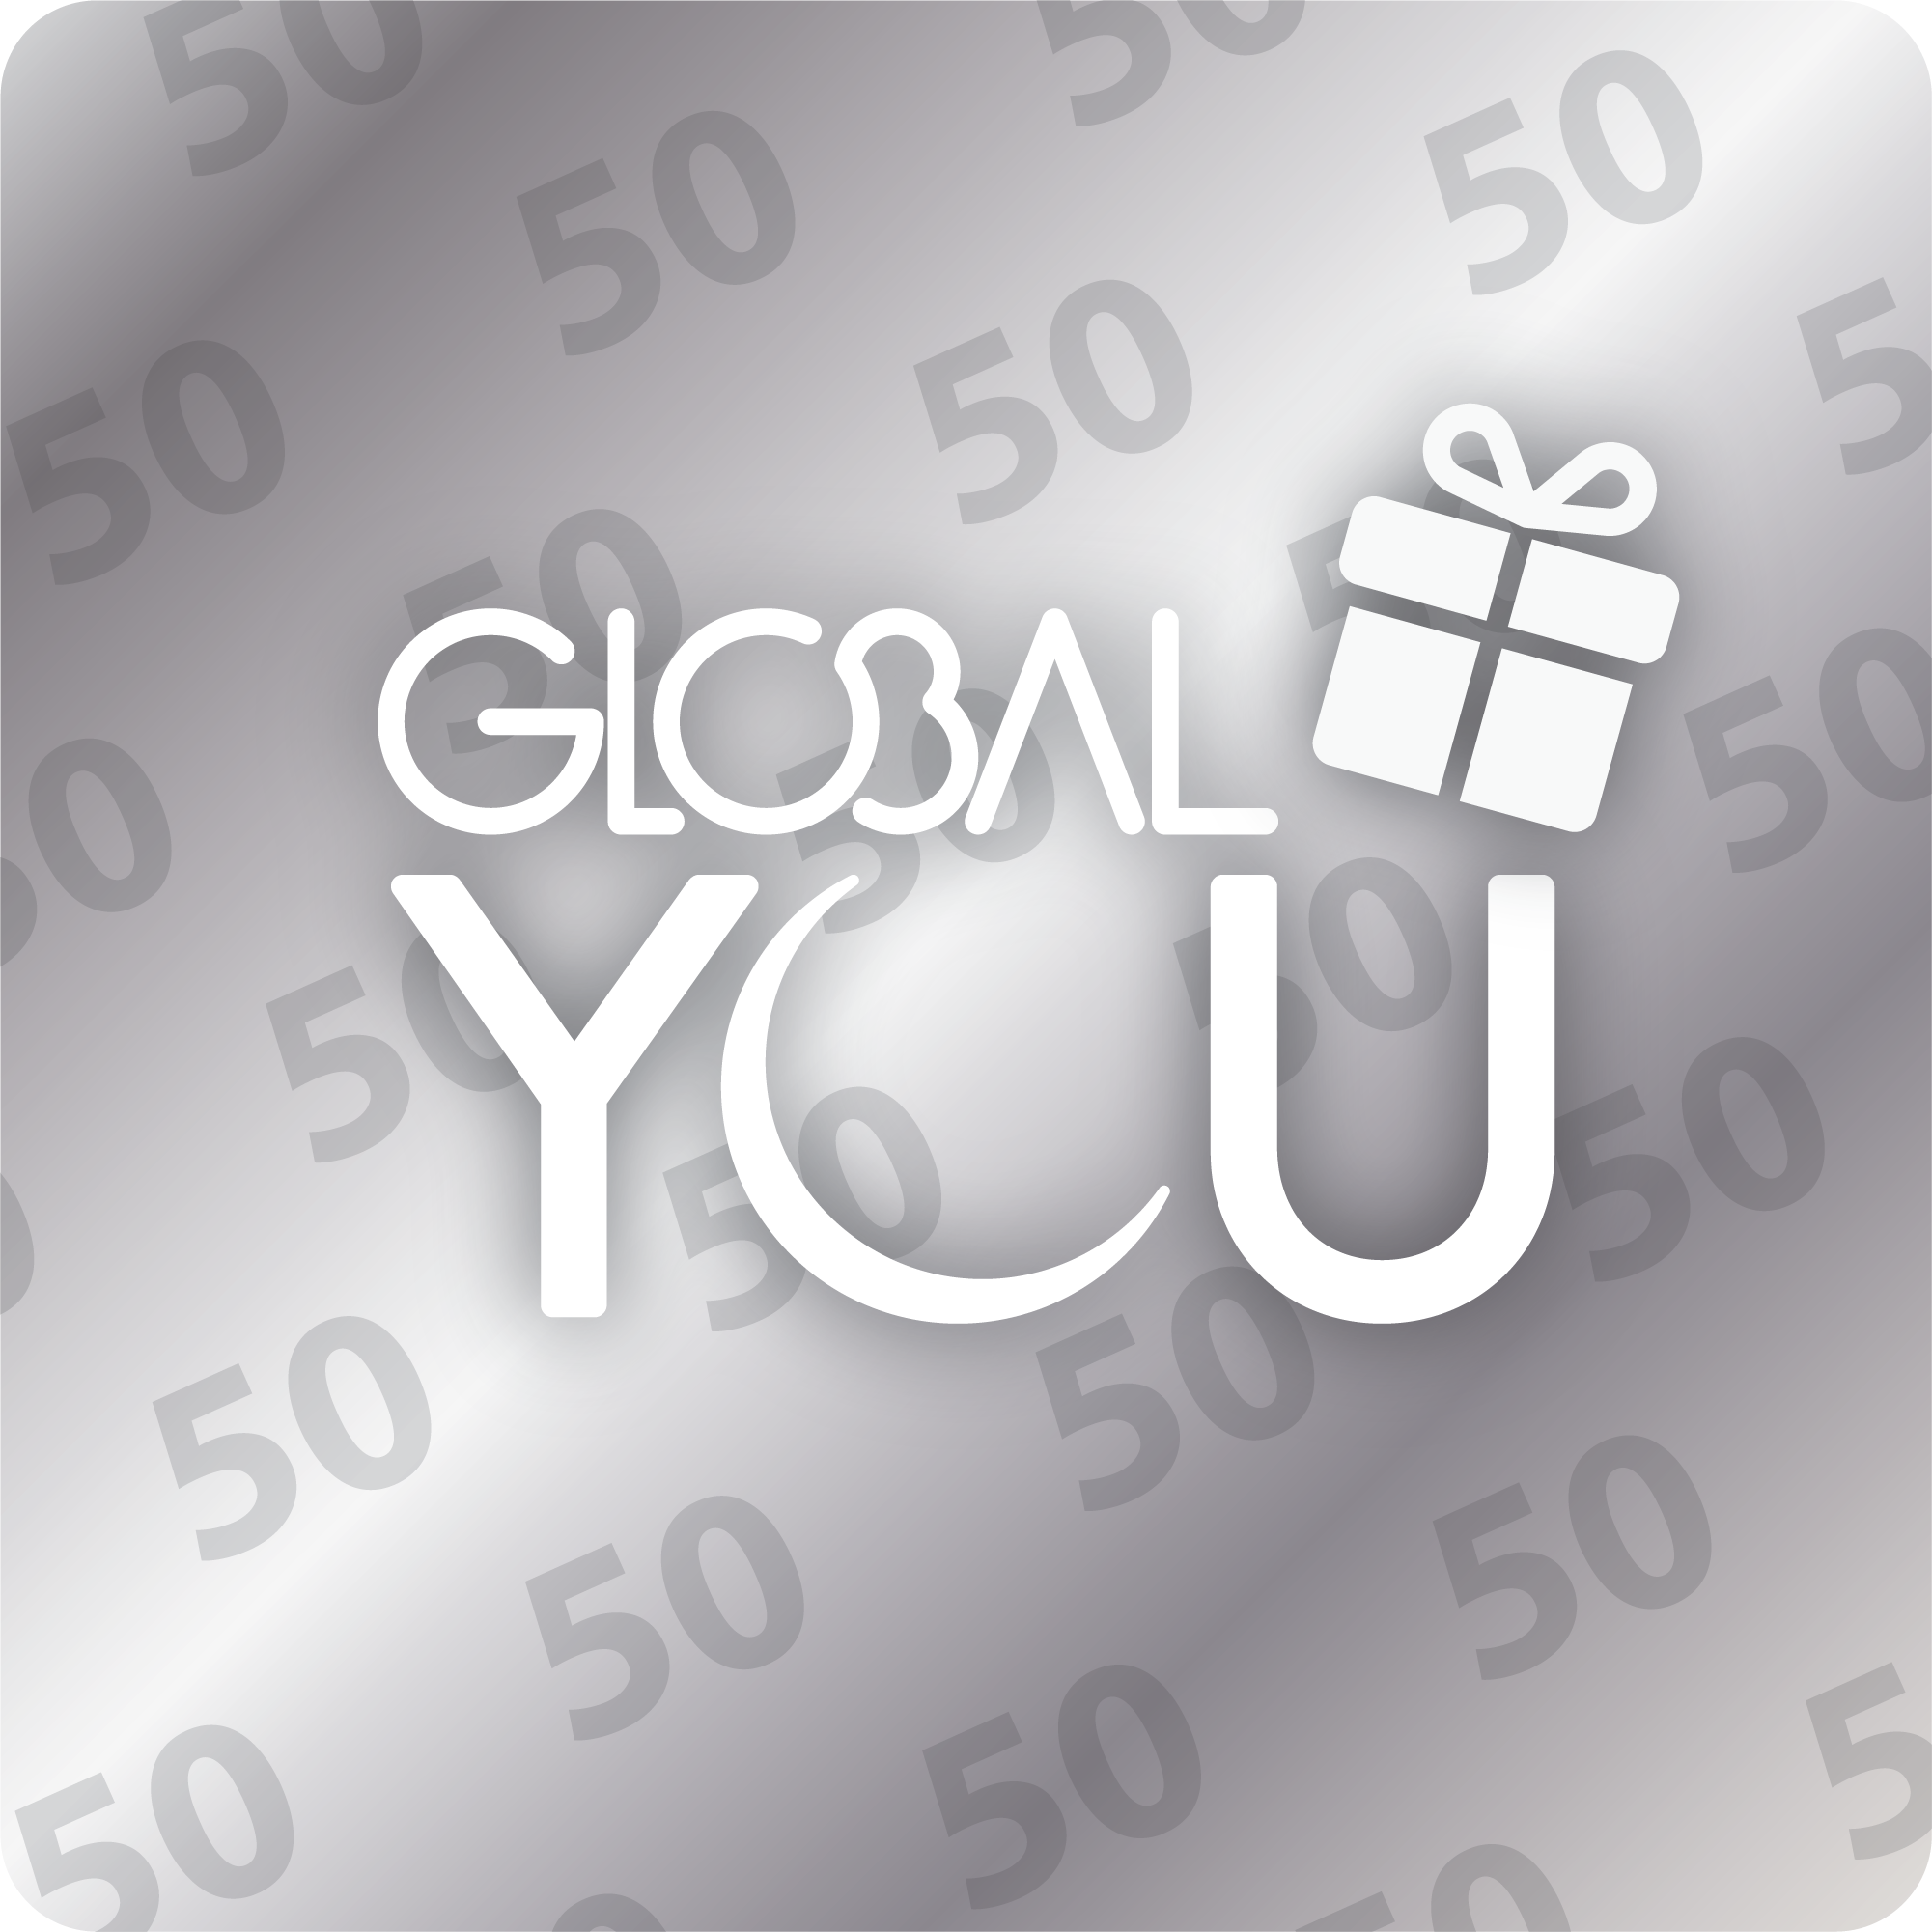 GlobalYou Gift Card